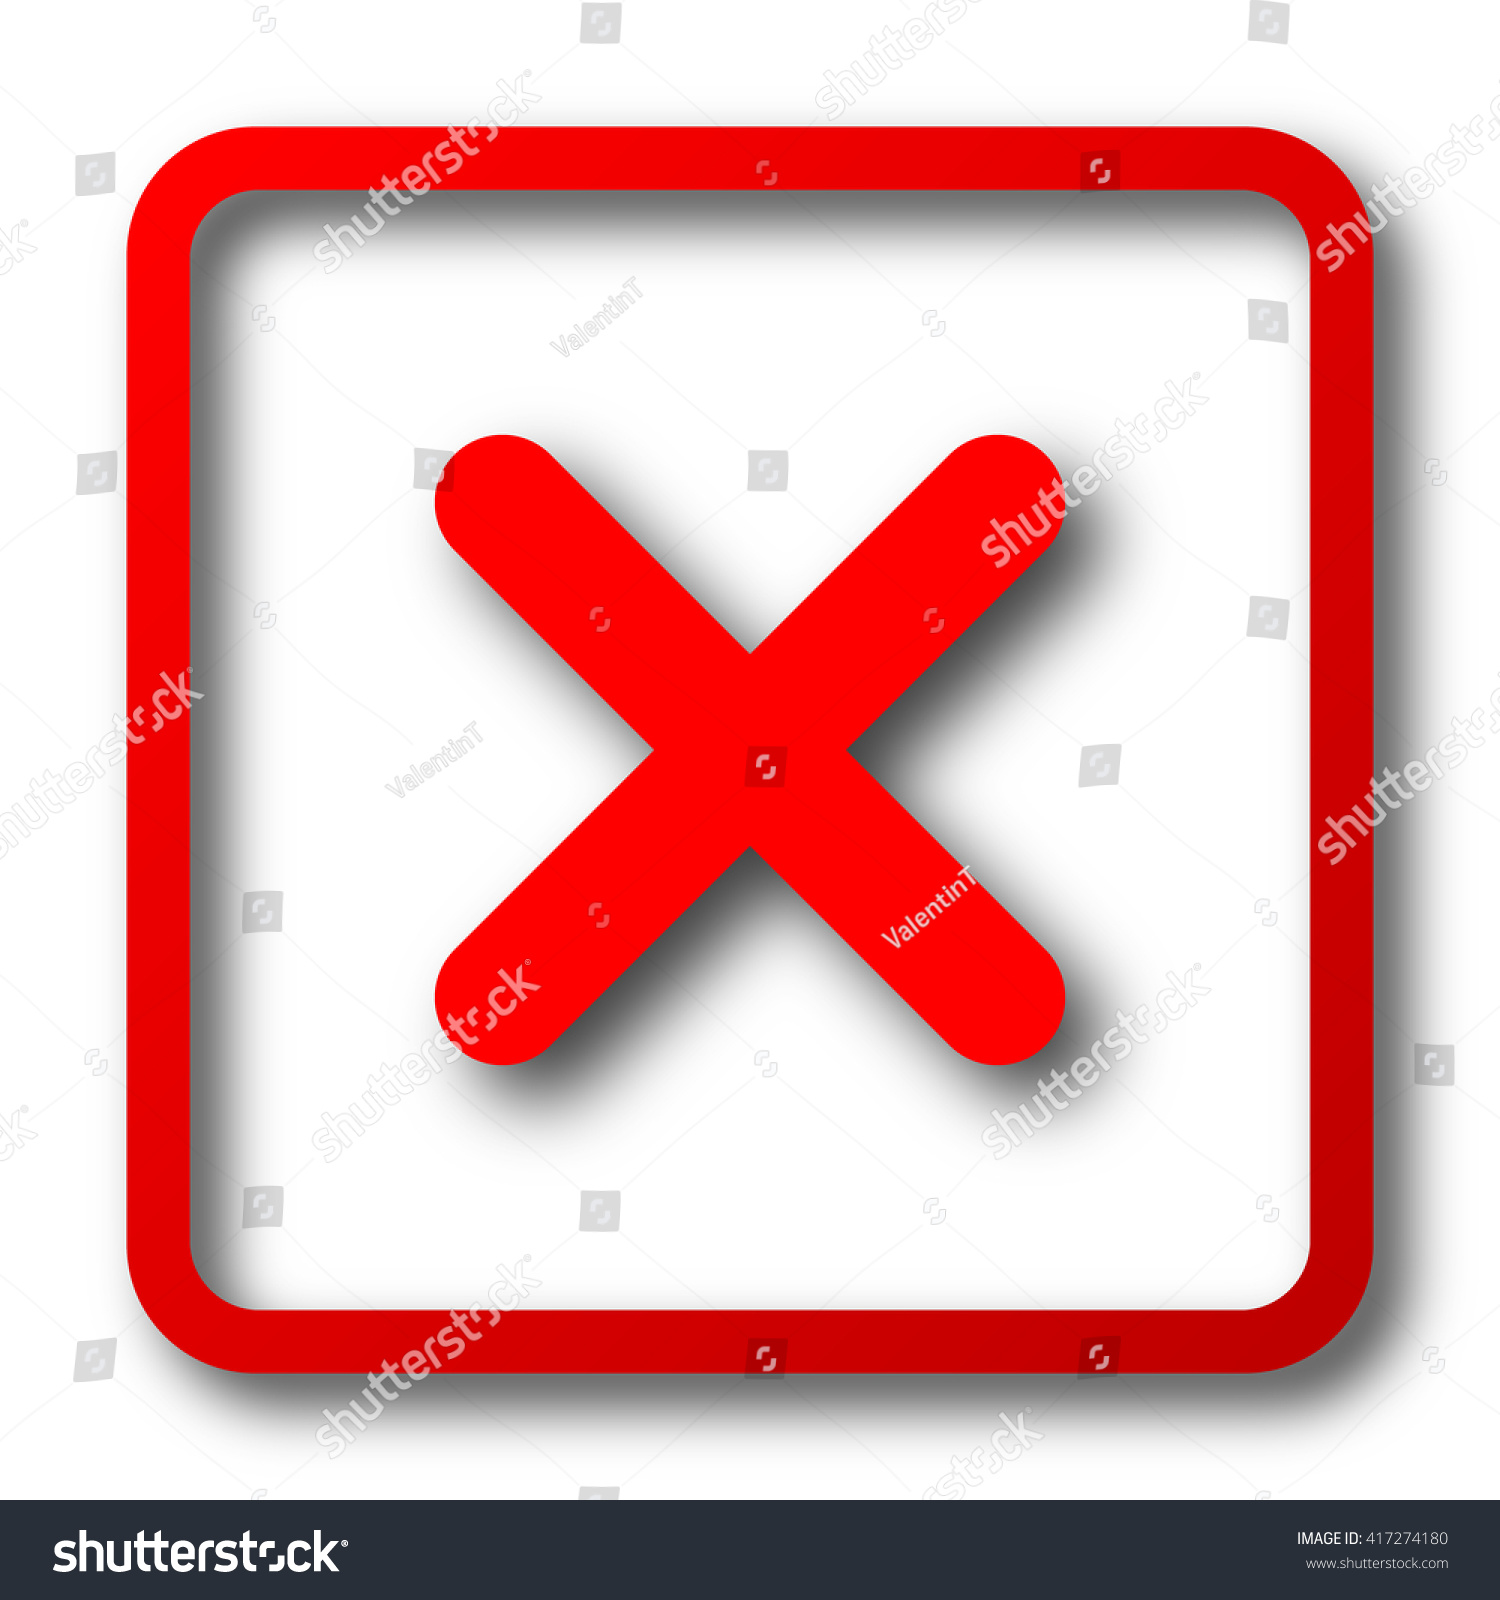 X Close Icon Internet Button On Stock Illustration 417274180 